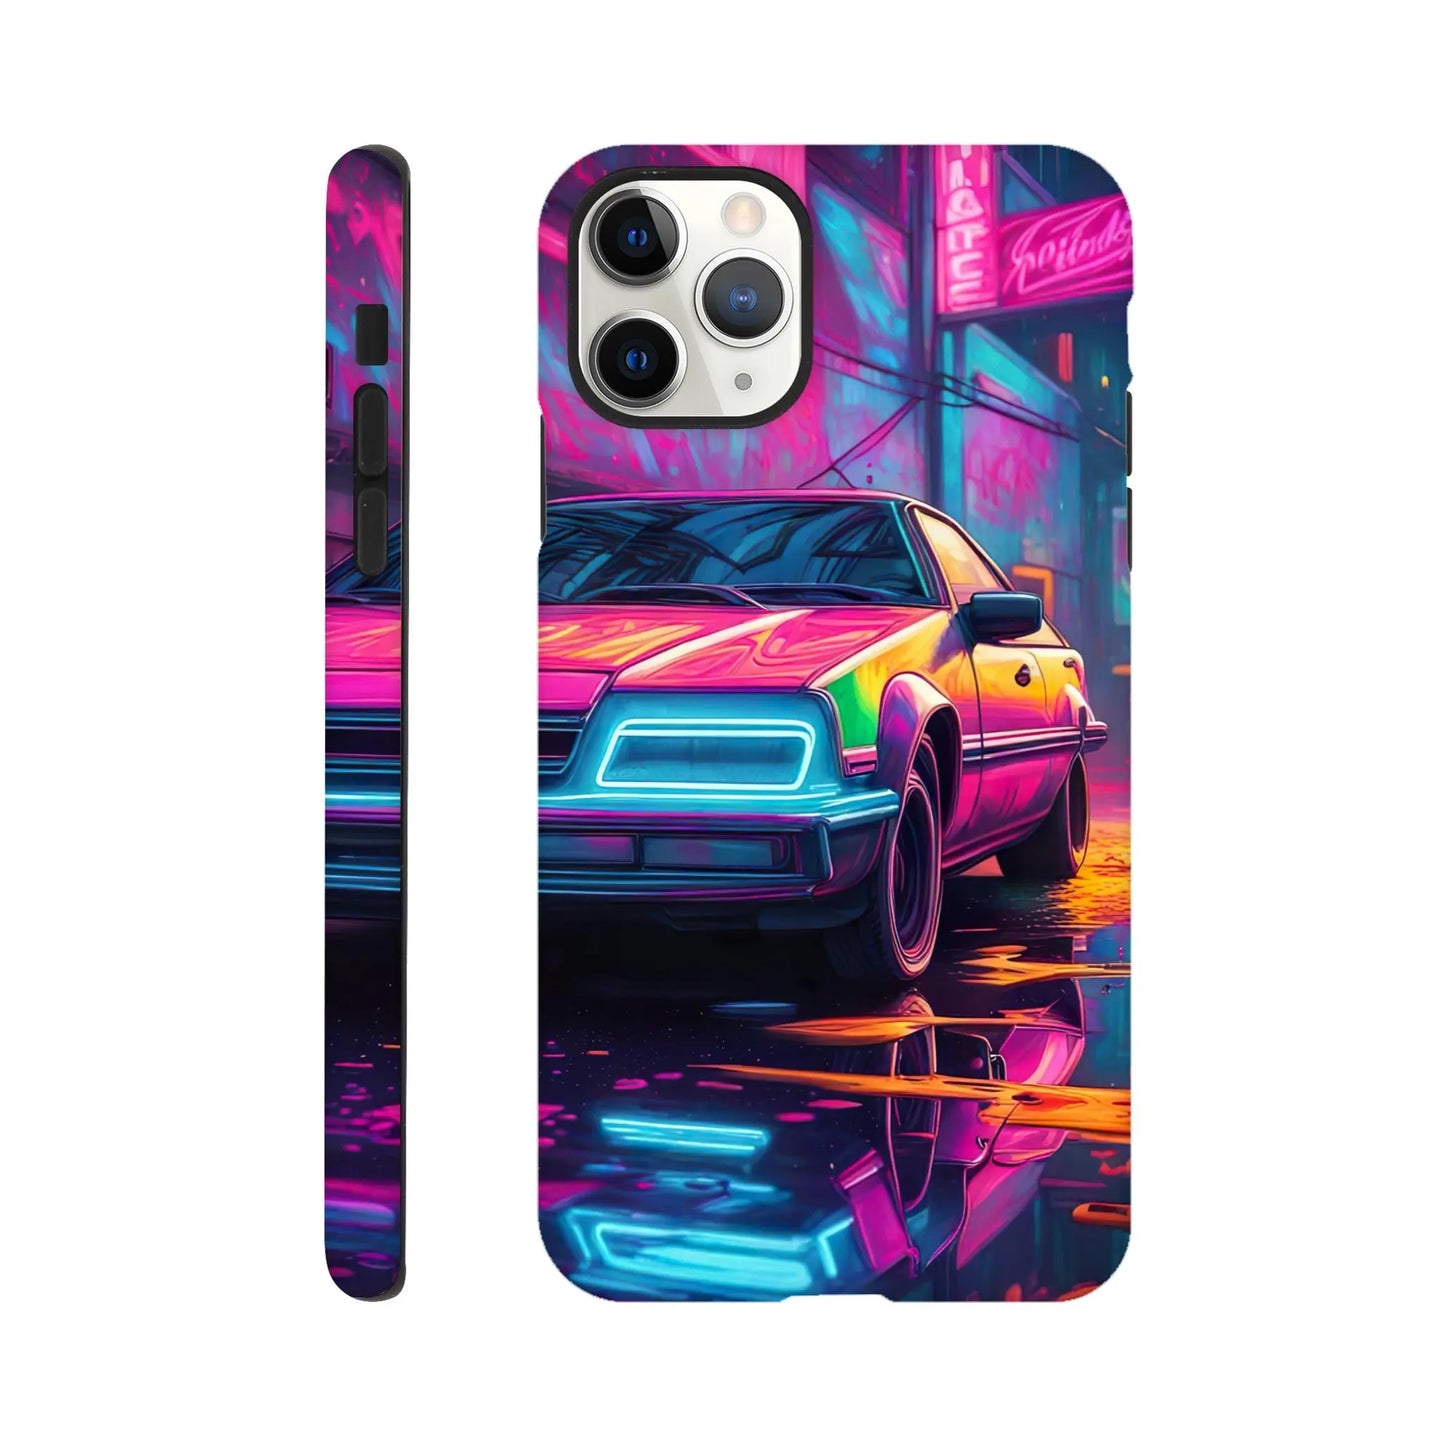 Smartphone-Hülle "Hart" - Retro Auto - Neon Stil, KI-Kunst RolConArt, Neon, iPhone-11-Pro-Max